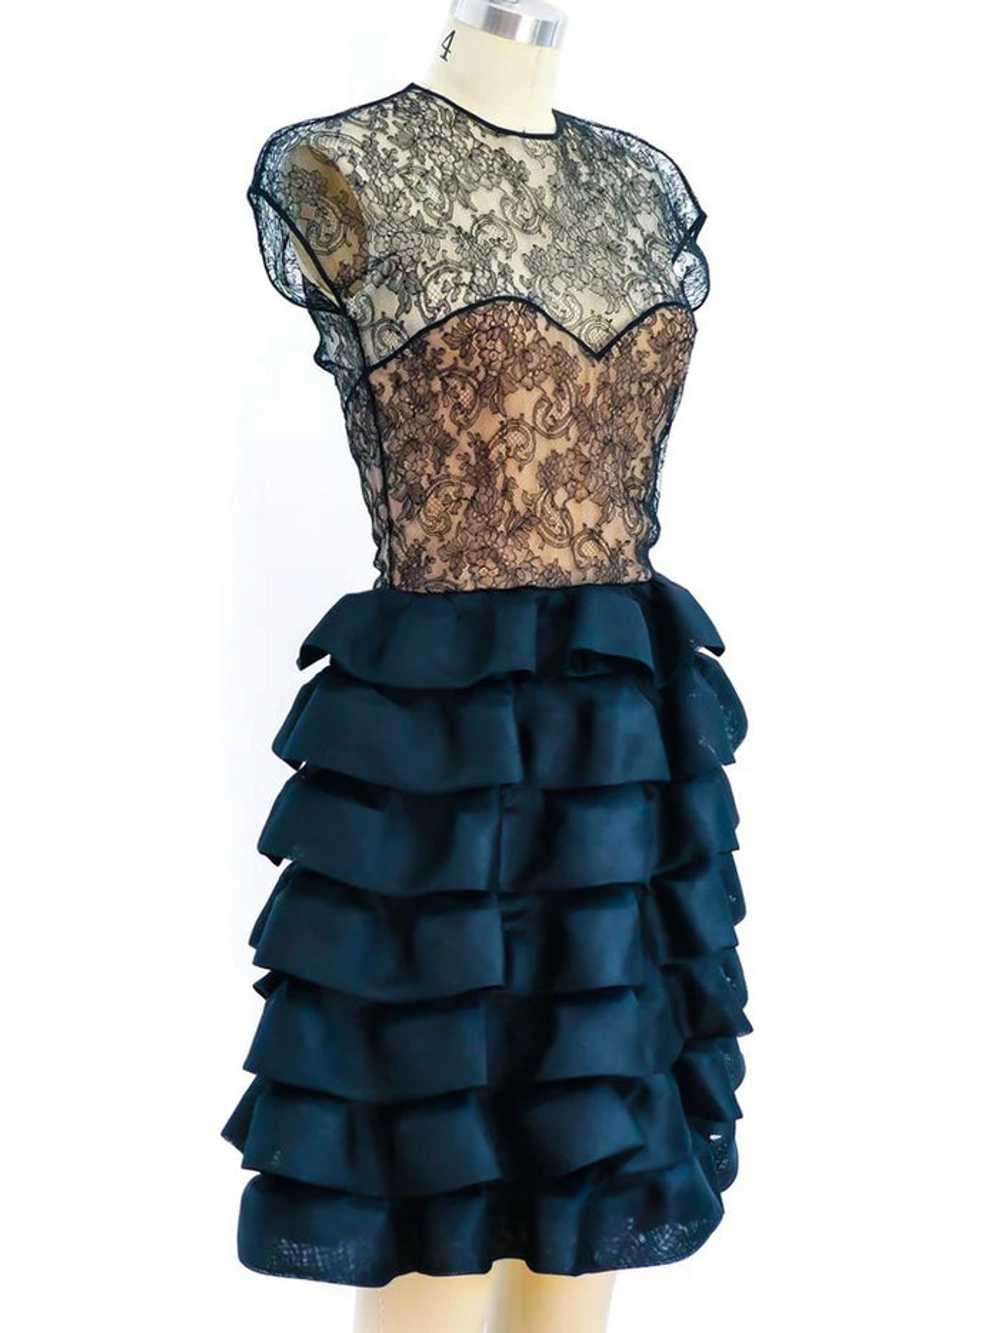 Oscar de la Renta Ruffle Lace Dress - image 3